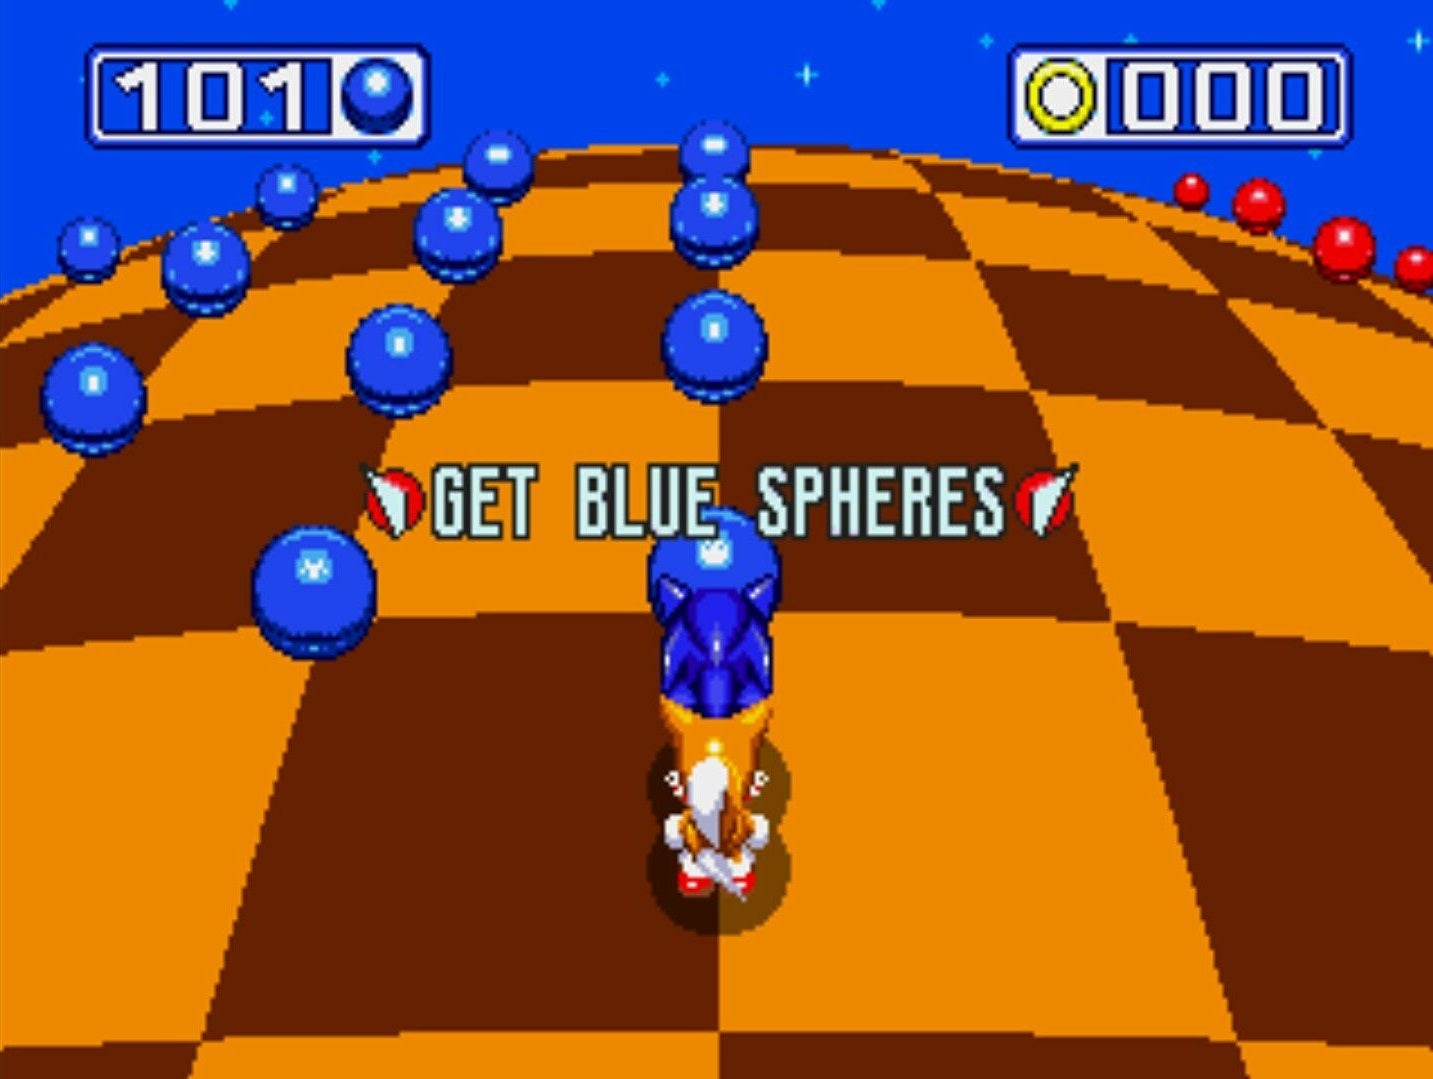 A pseudo 3D bonus stage asks Sonic to "Get Blue Spheres"